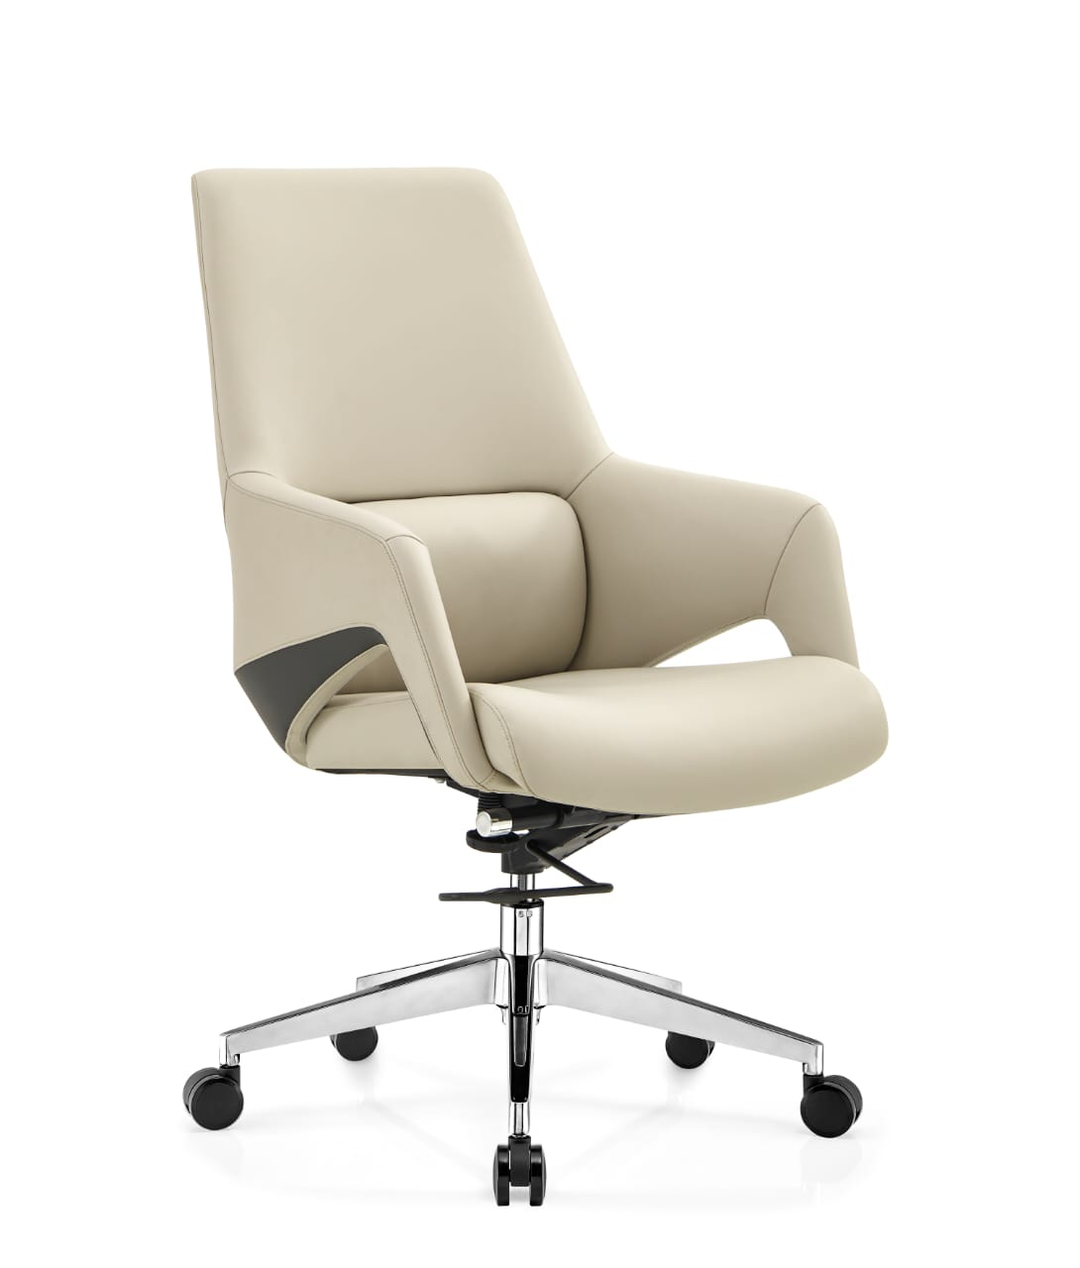 Medium back office chairs by Classic Furniture Dubai UAE